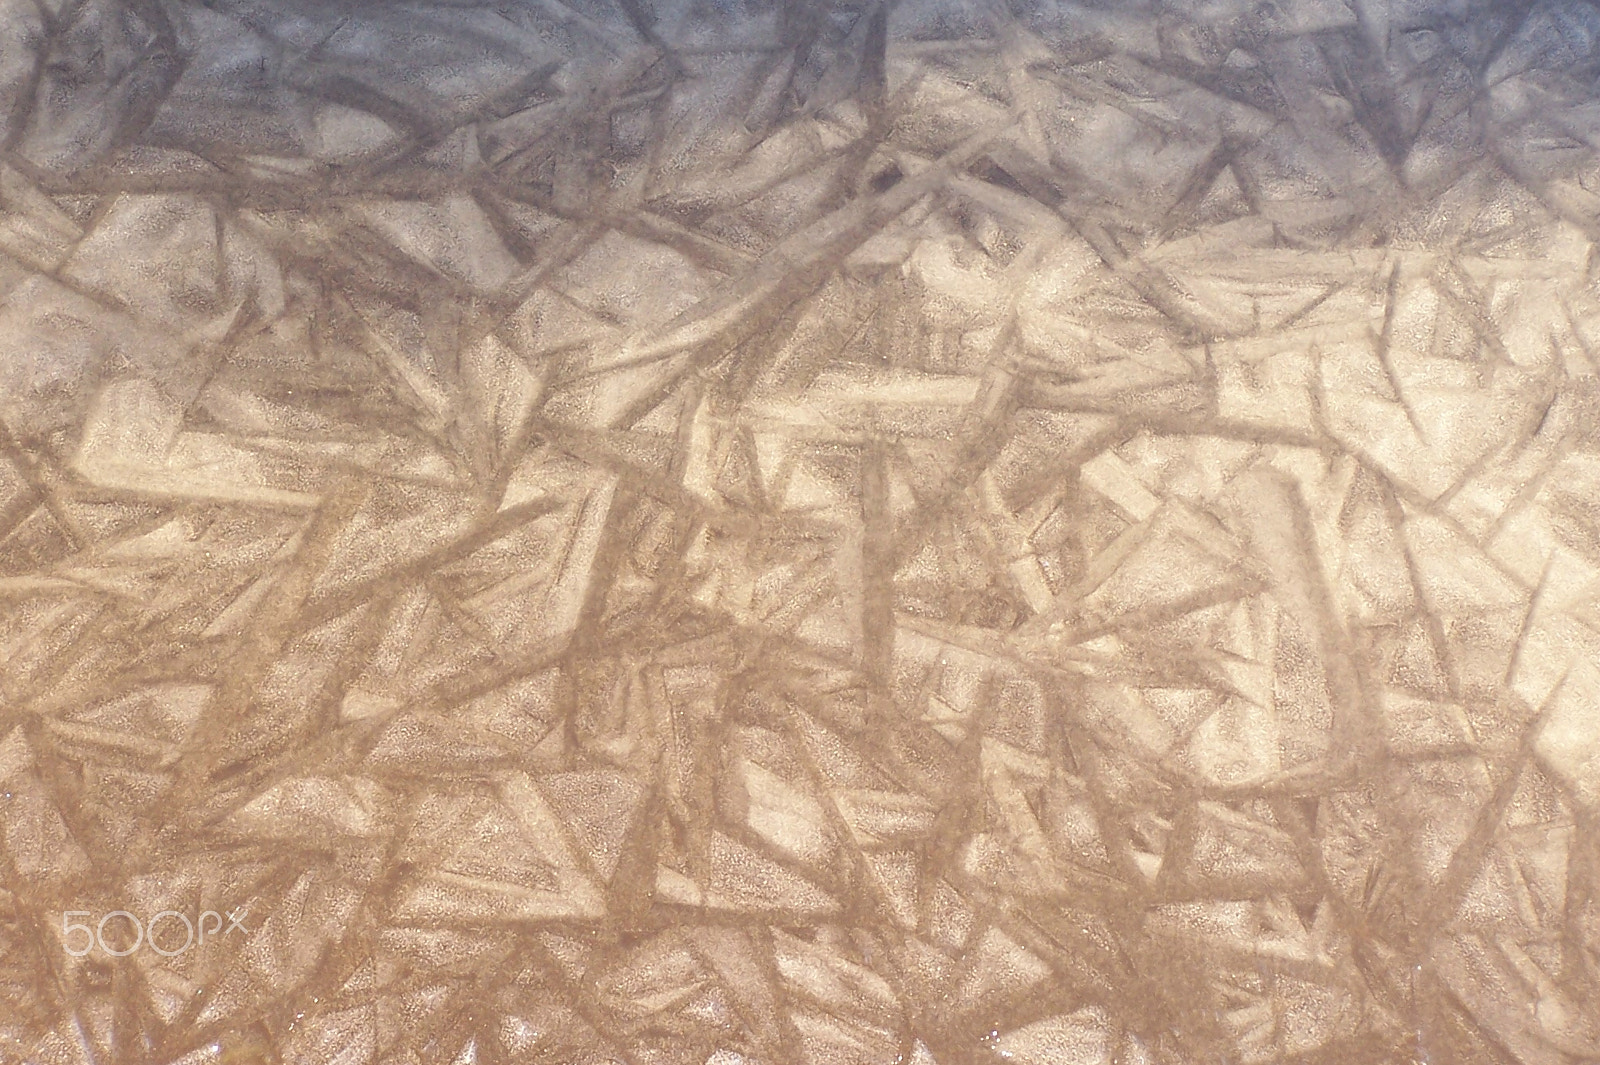 Kodak DX6490 ZOOM DIGITAL CAMERA sample photo. Cracked ice pattern photography